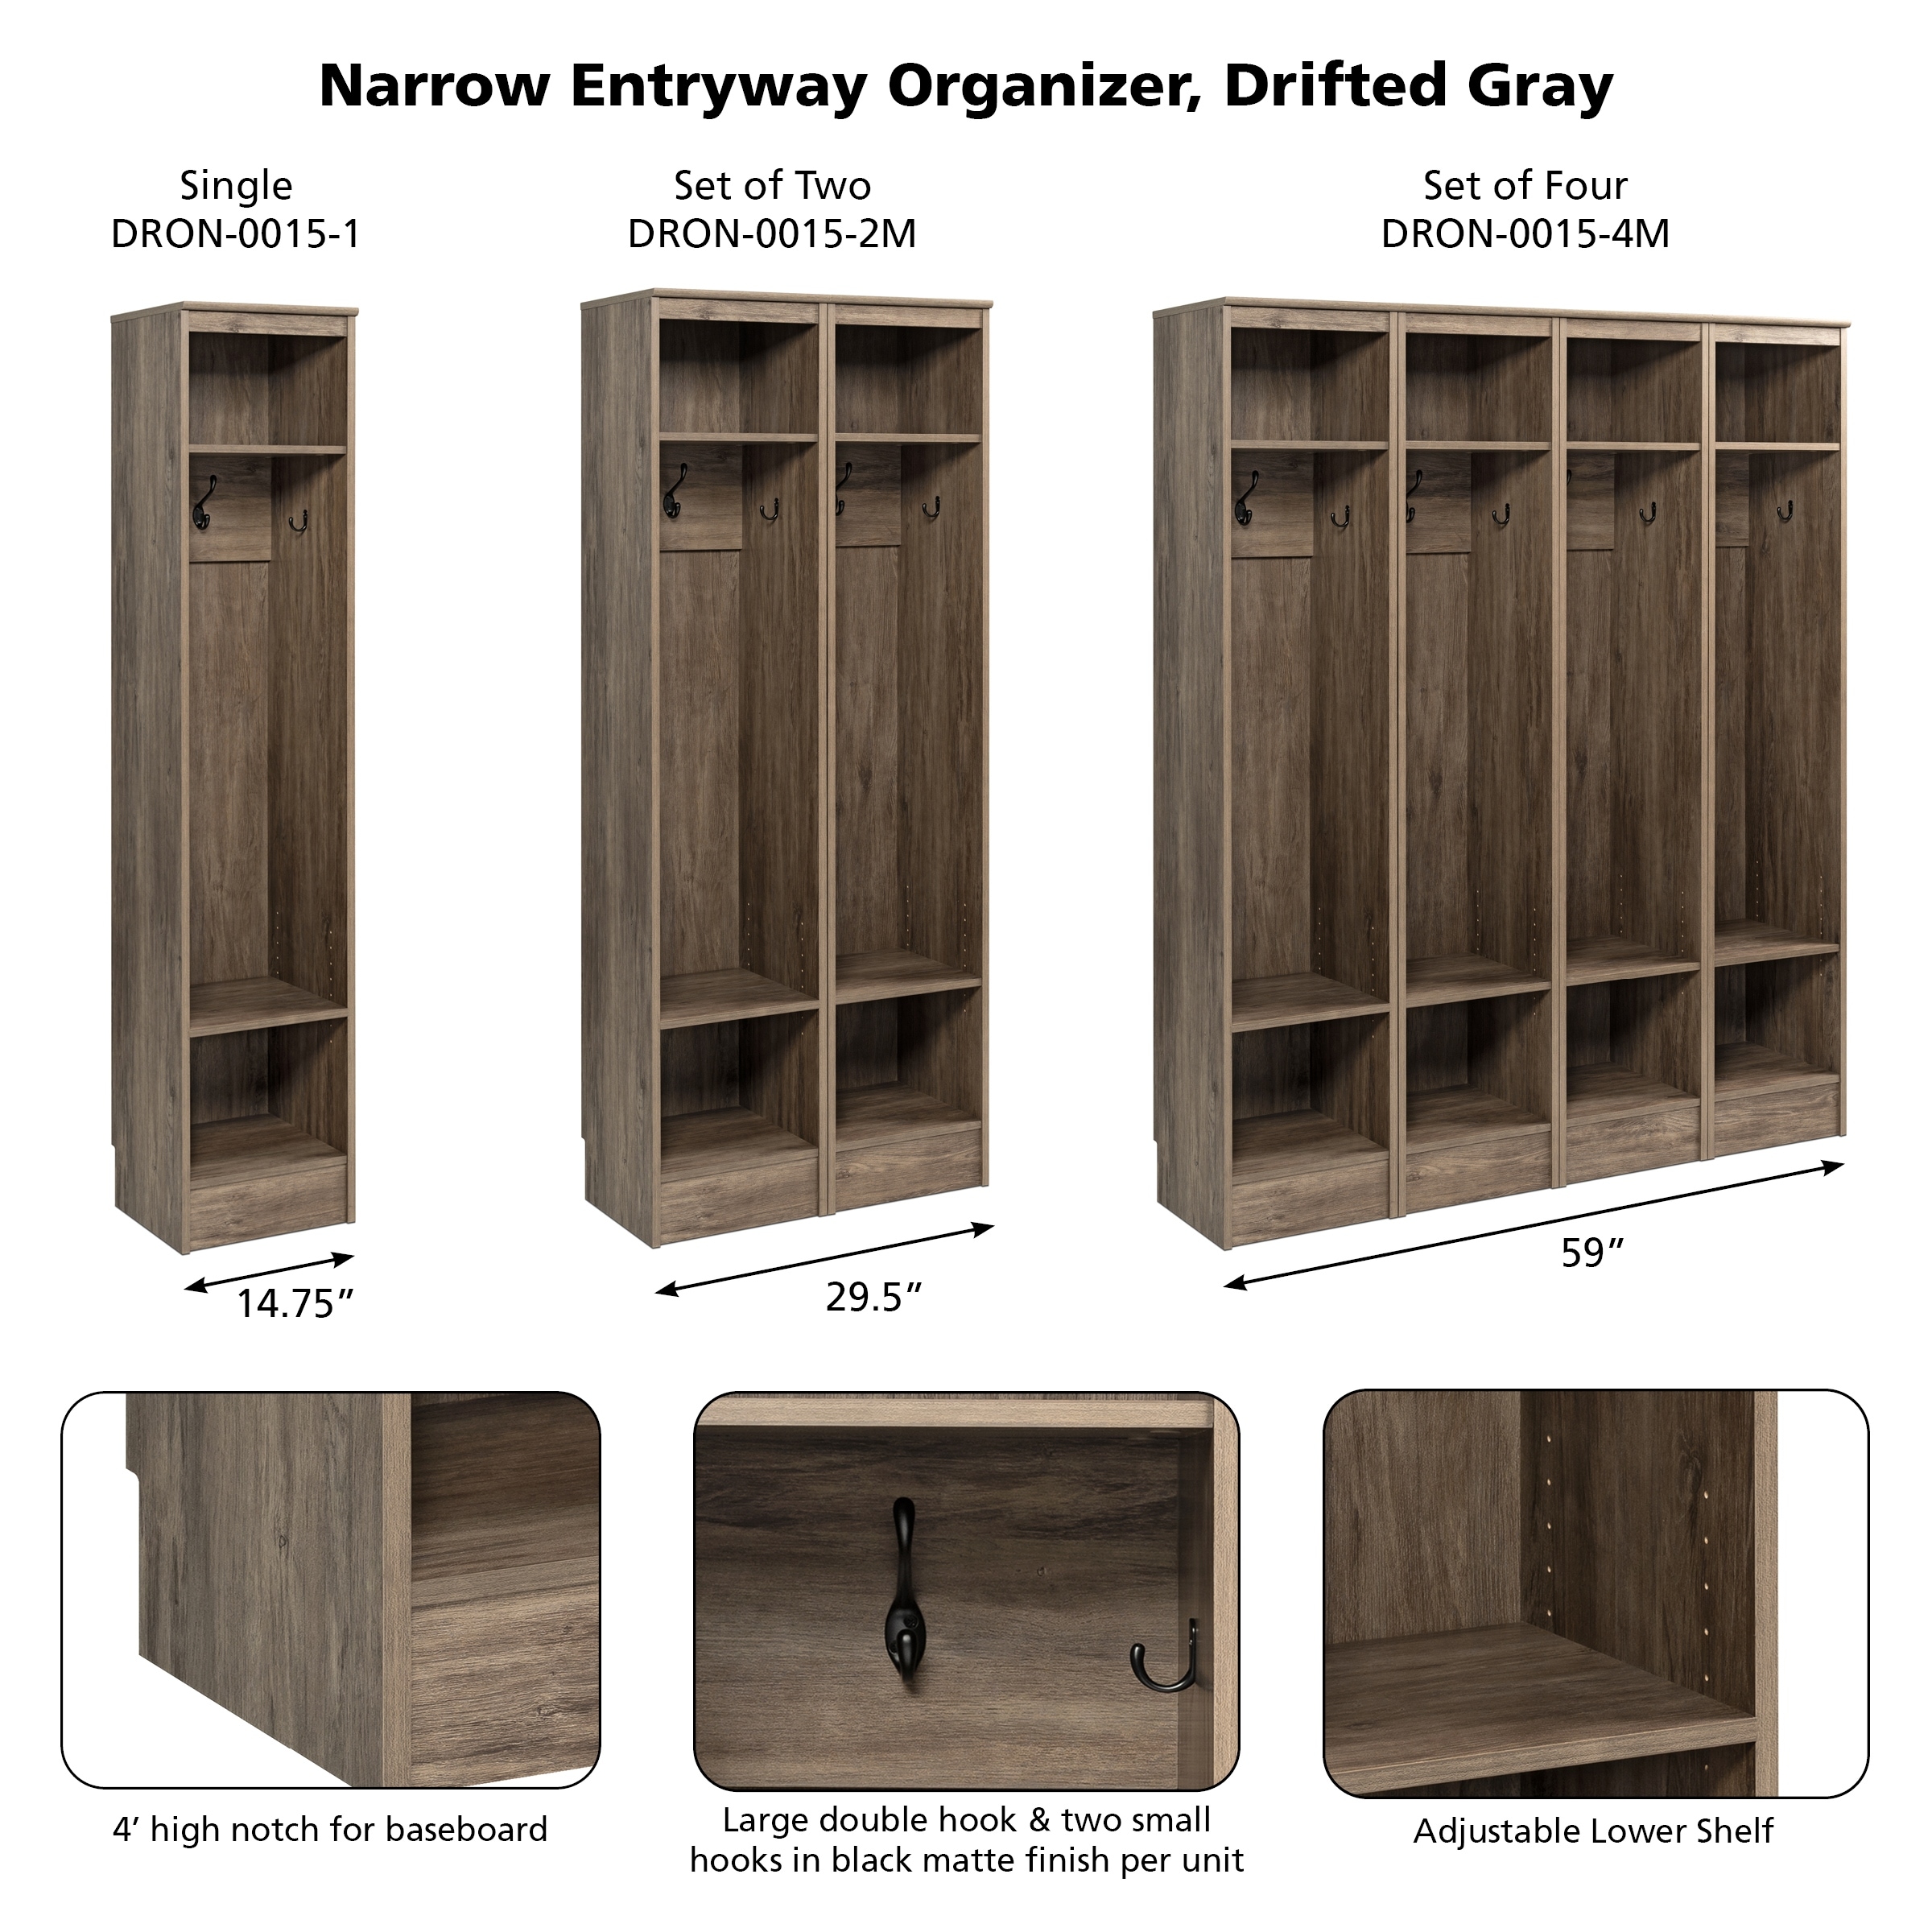 Set of 4 Narrow Entryway Organizers Drifted Gray - Prepac